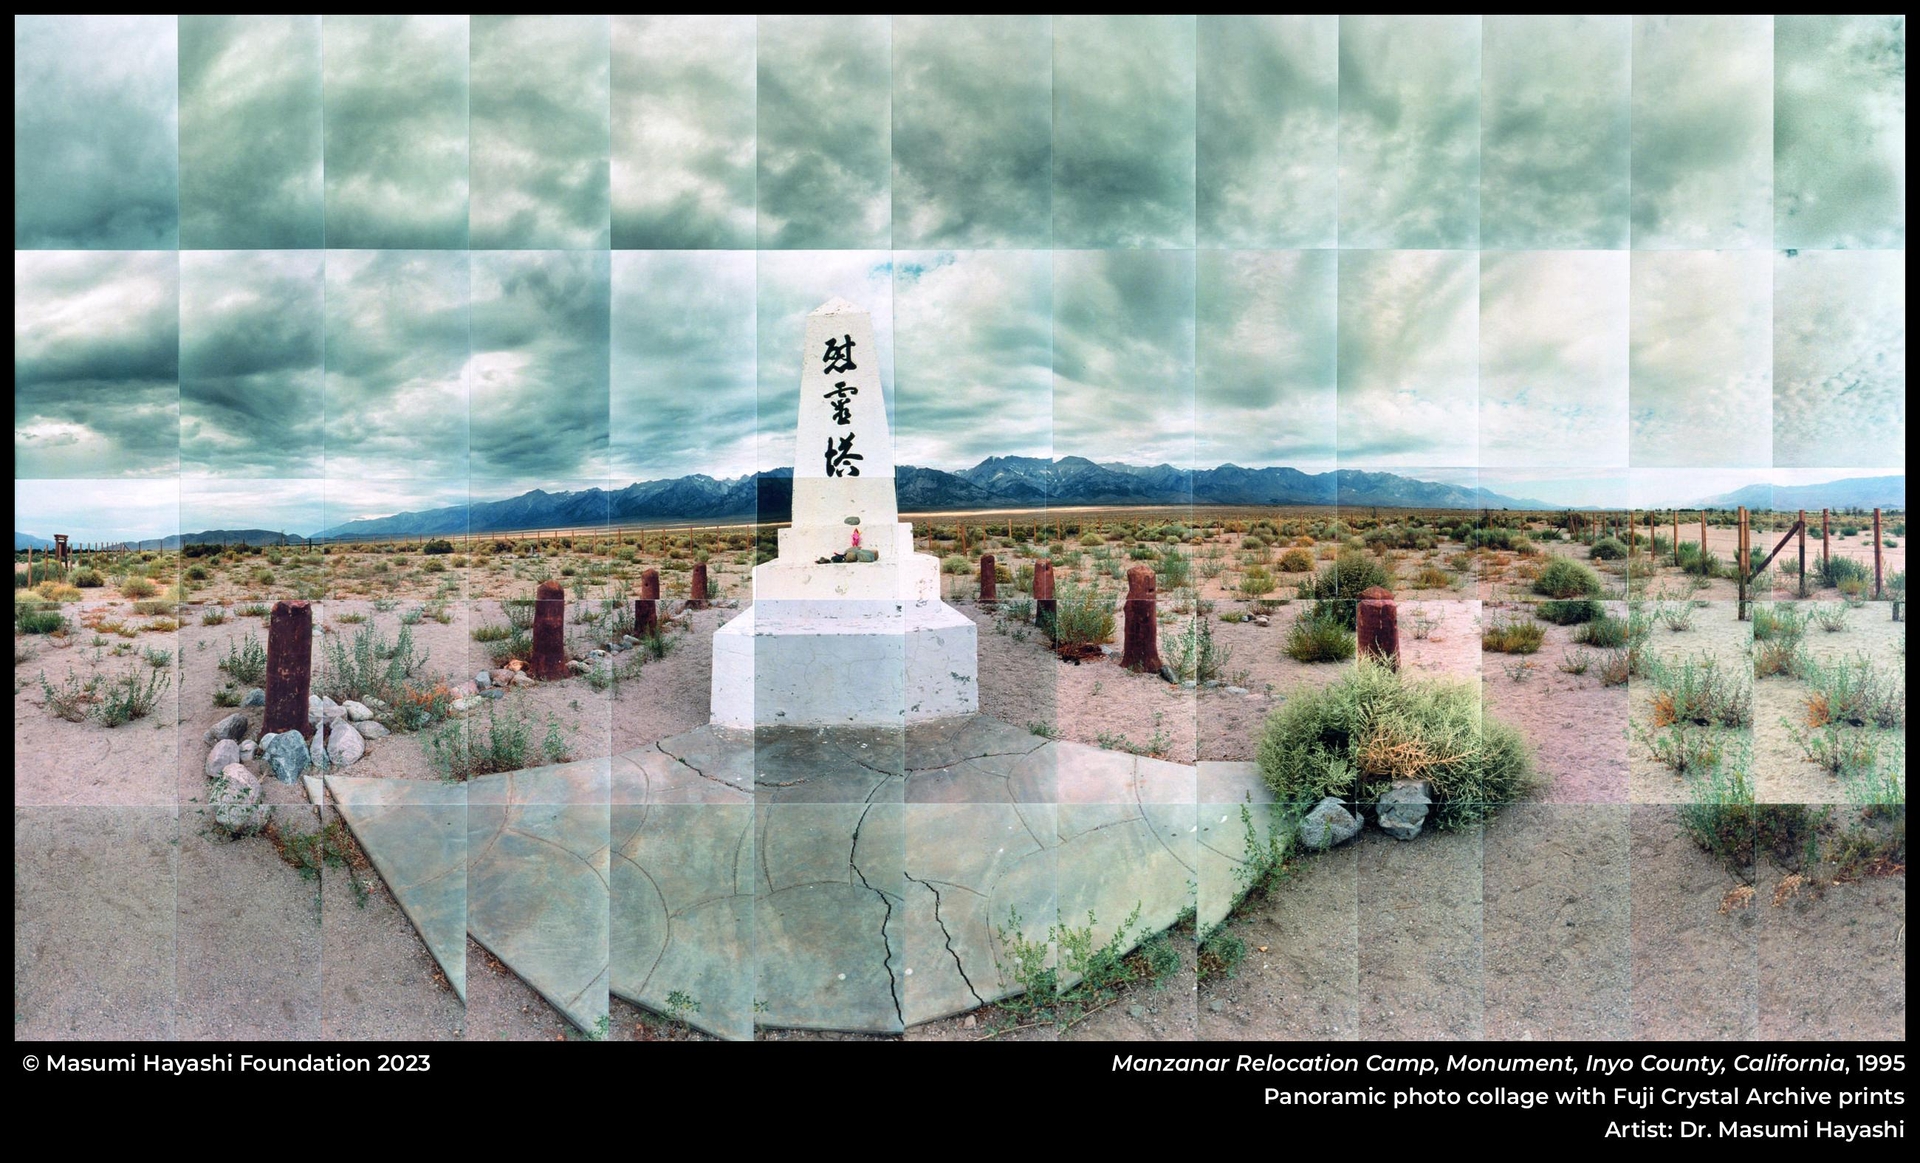 Manzanar Relocation Camp, Monument, Inyo County, California